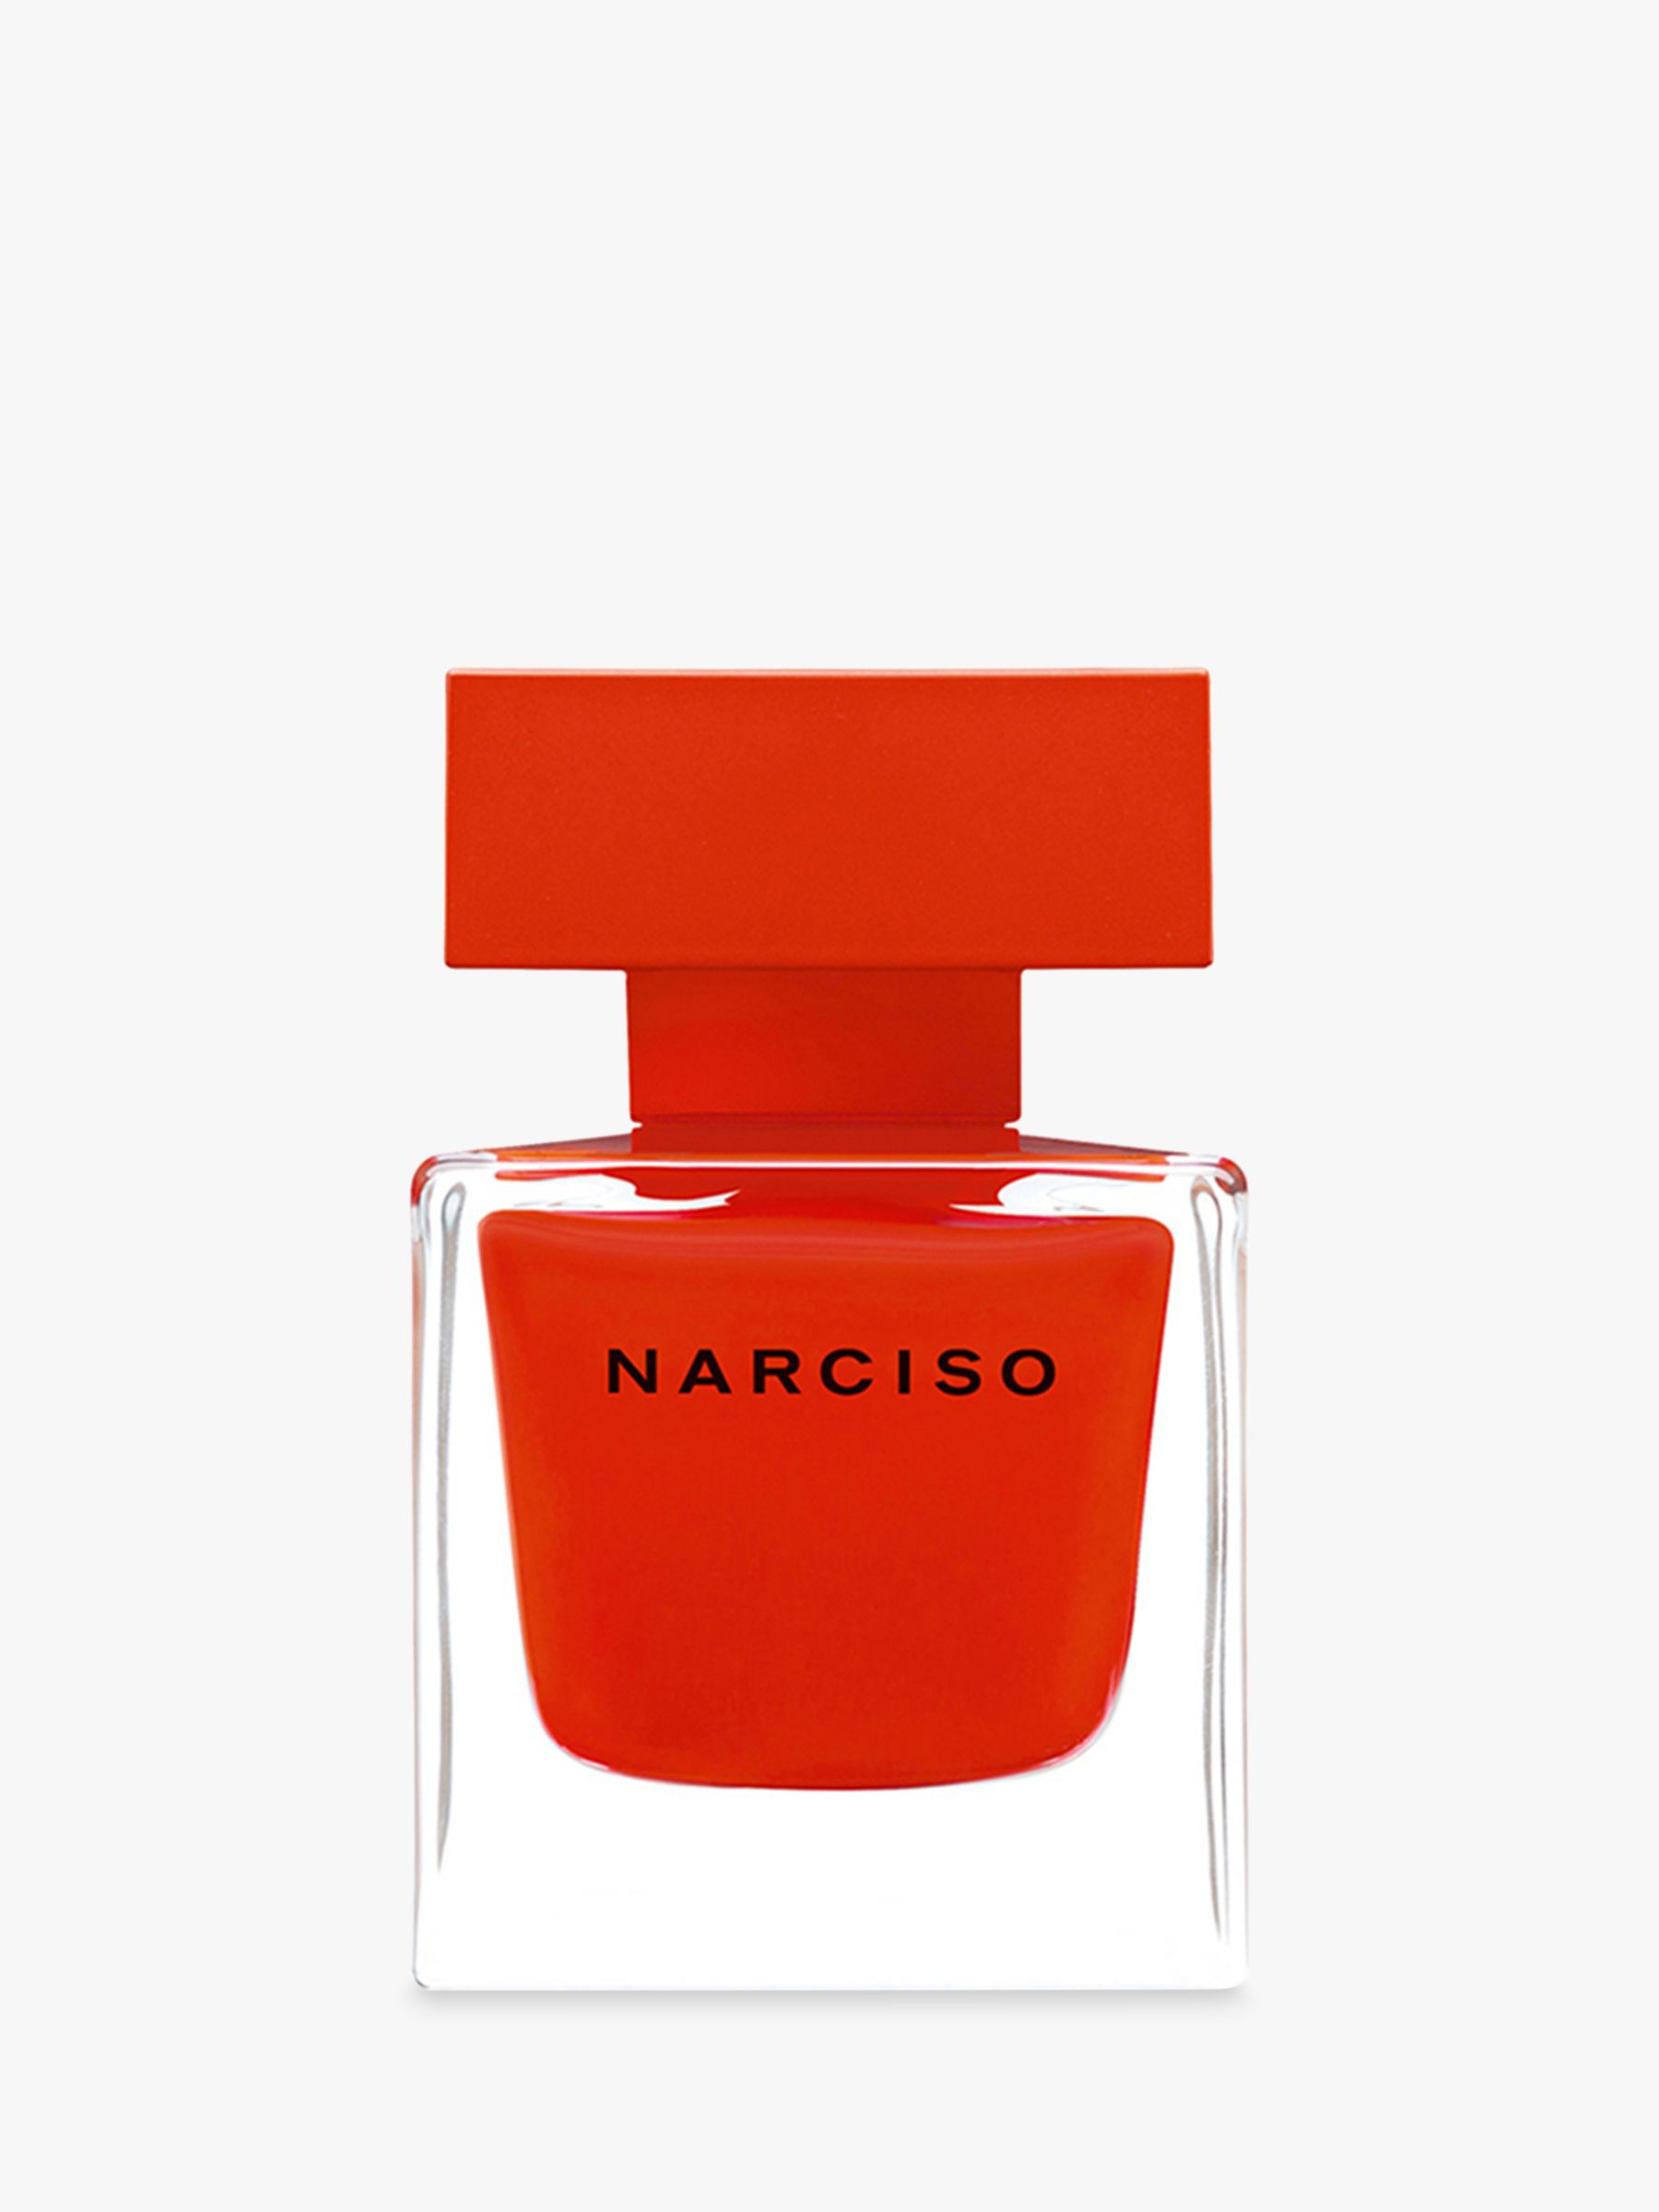 Туалетная вода narciso. Narciso Rodriguez Parfum. Narciso Rodriguez Narciso rouge 50ml. Тфксшыыщ кщгп тфксшыыщ кщвешпгшя. Парфюм Narciso Rodriguez красный.